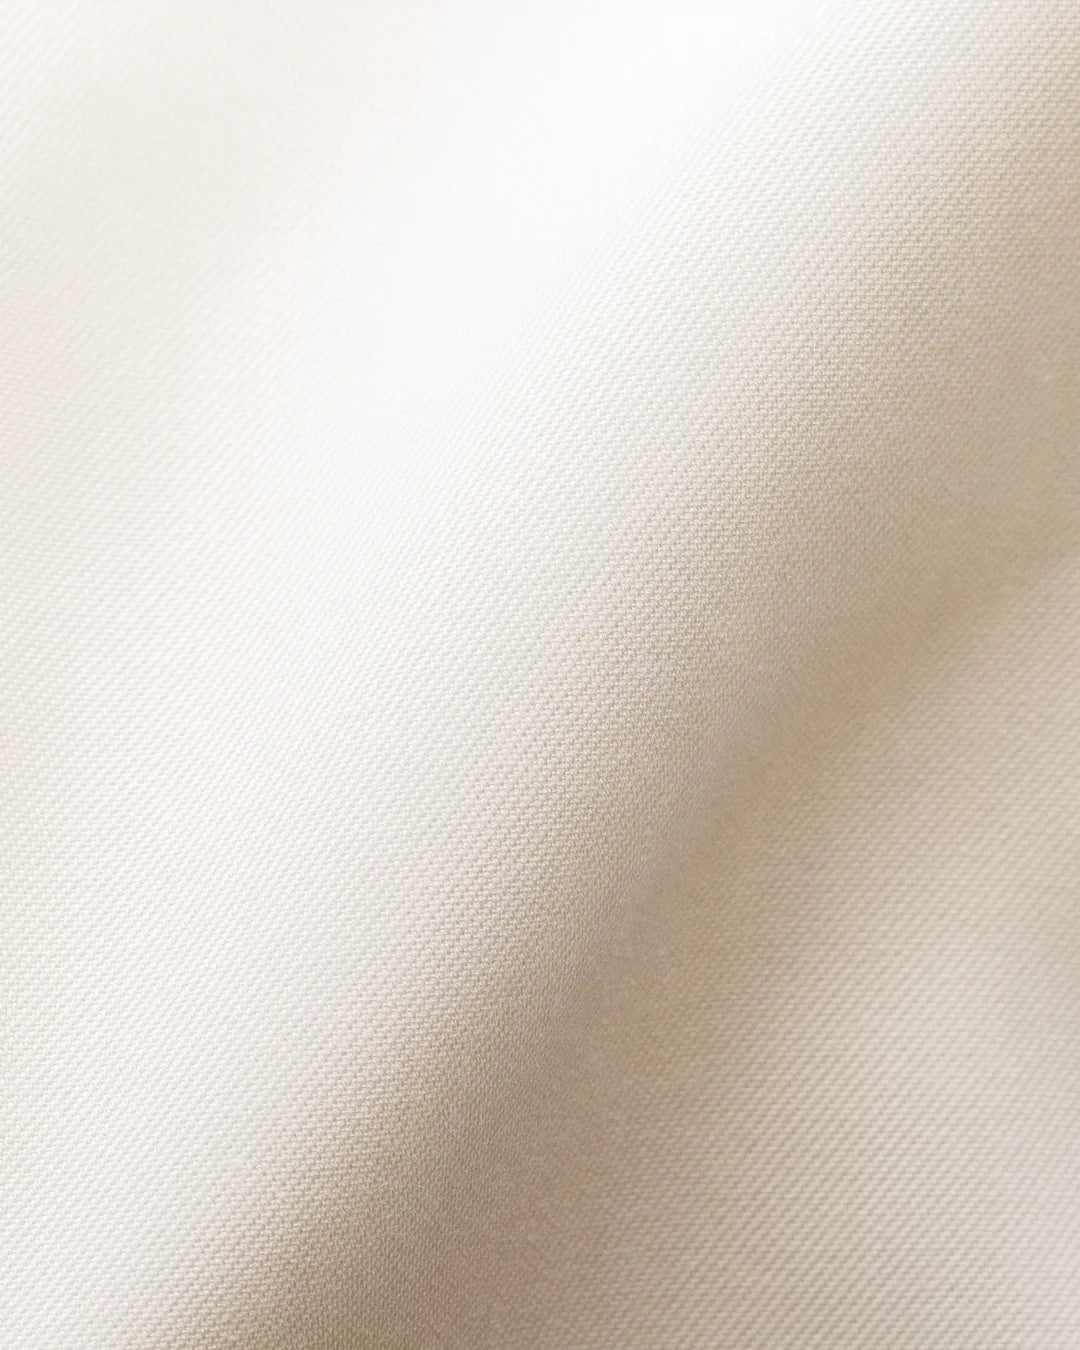 Eton Signature Twill Dress Shirt in Off-White